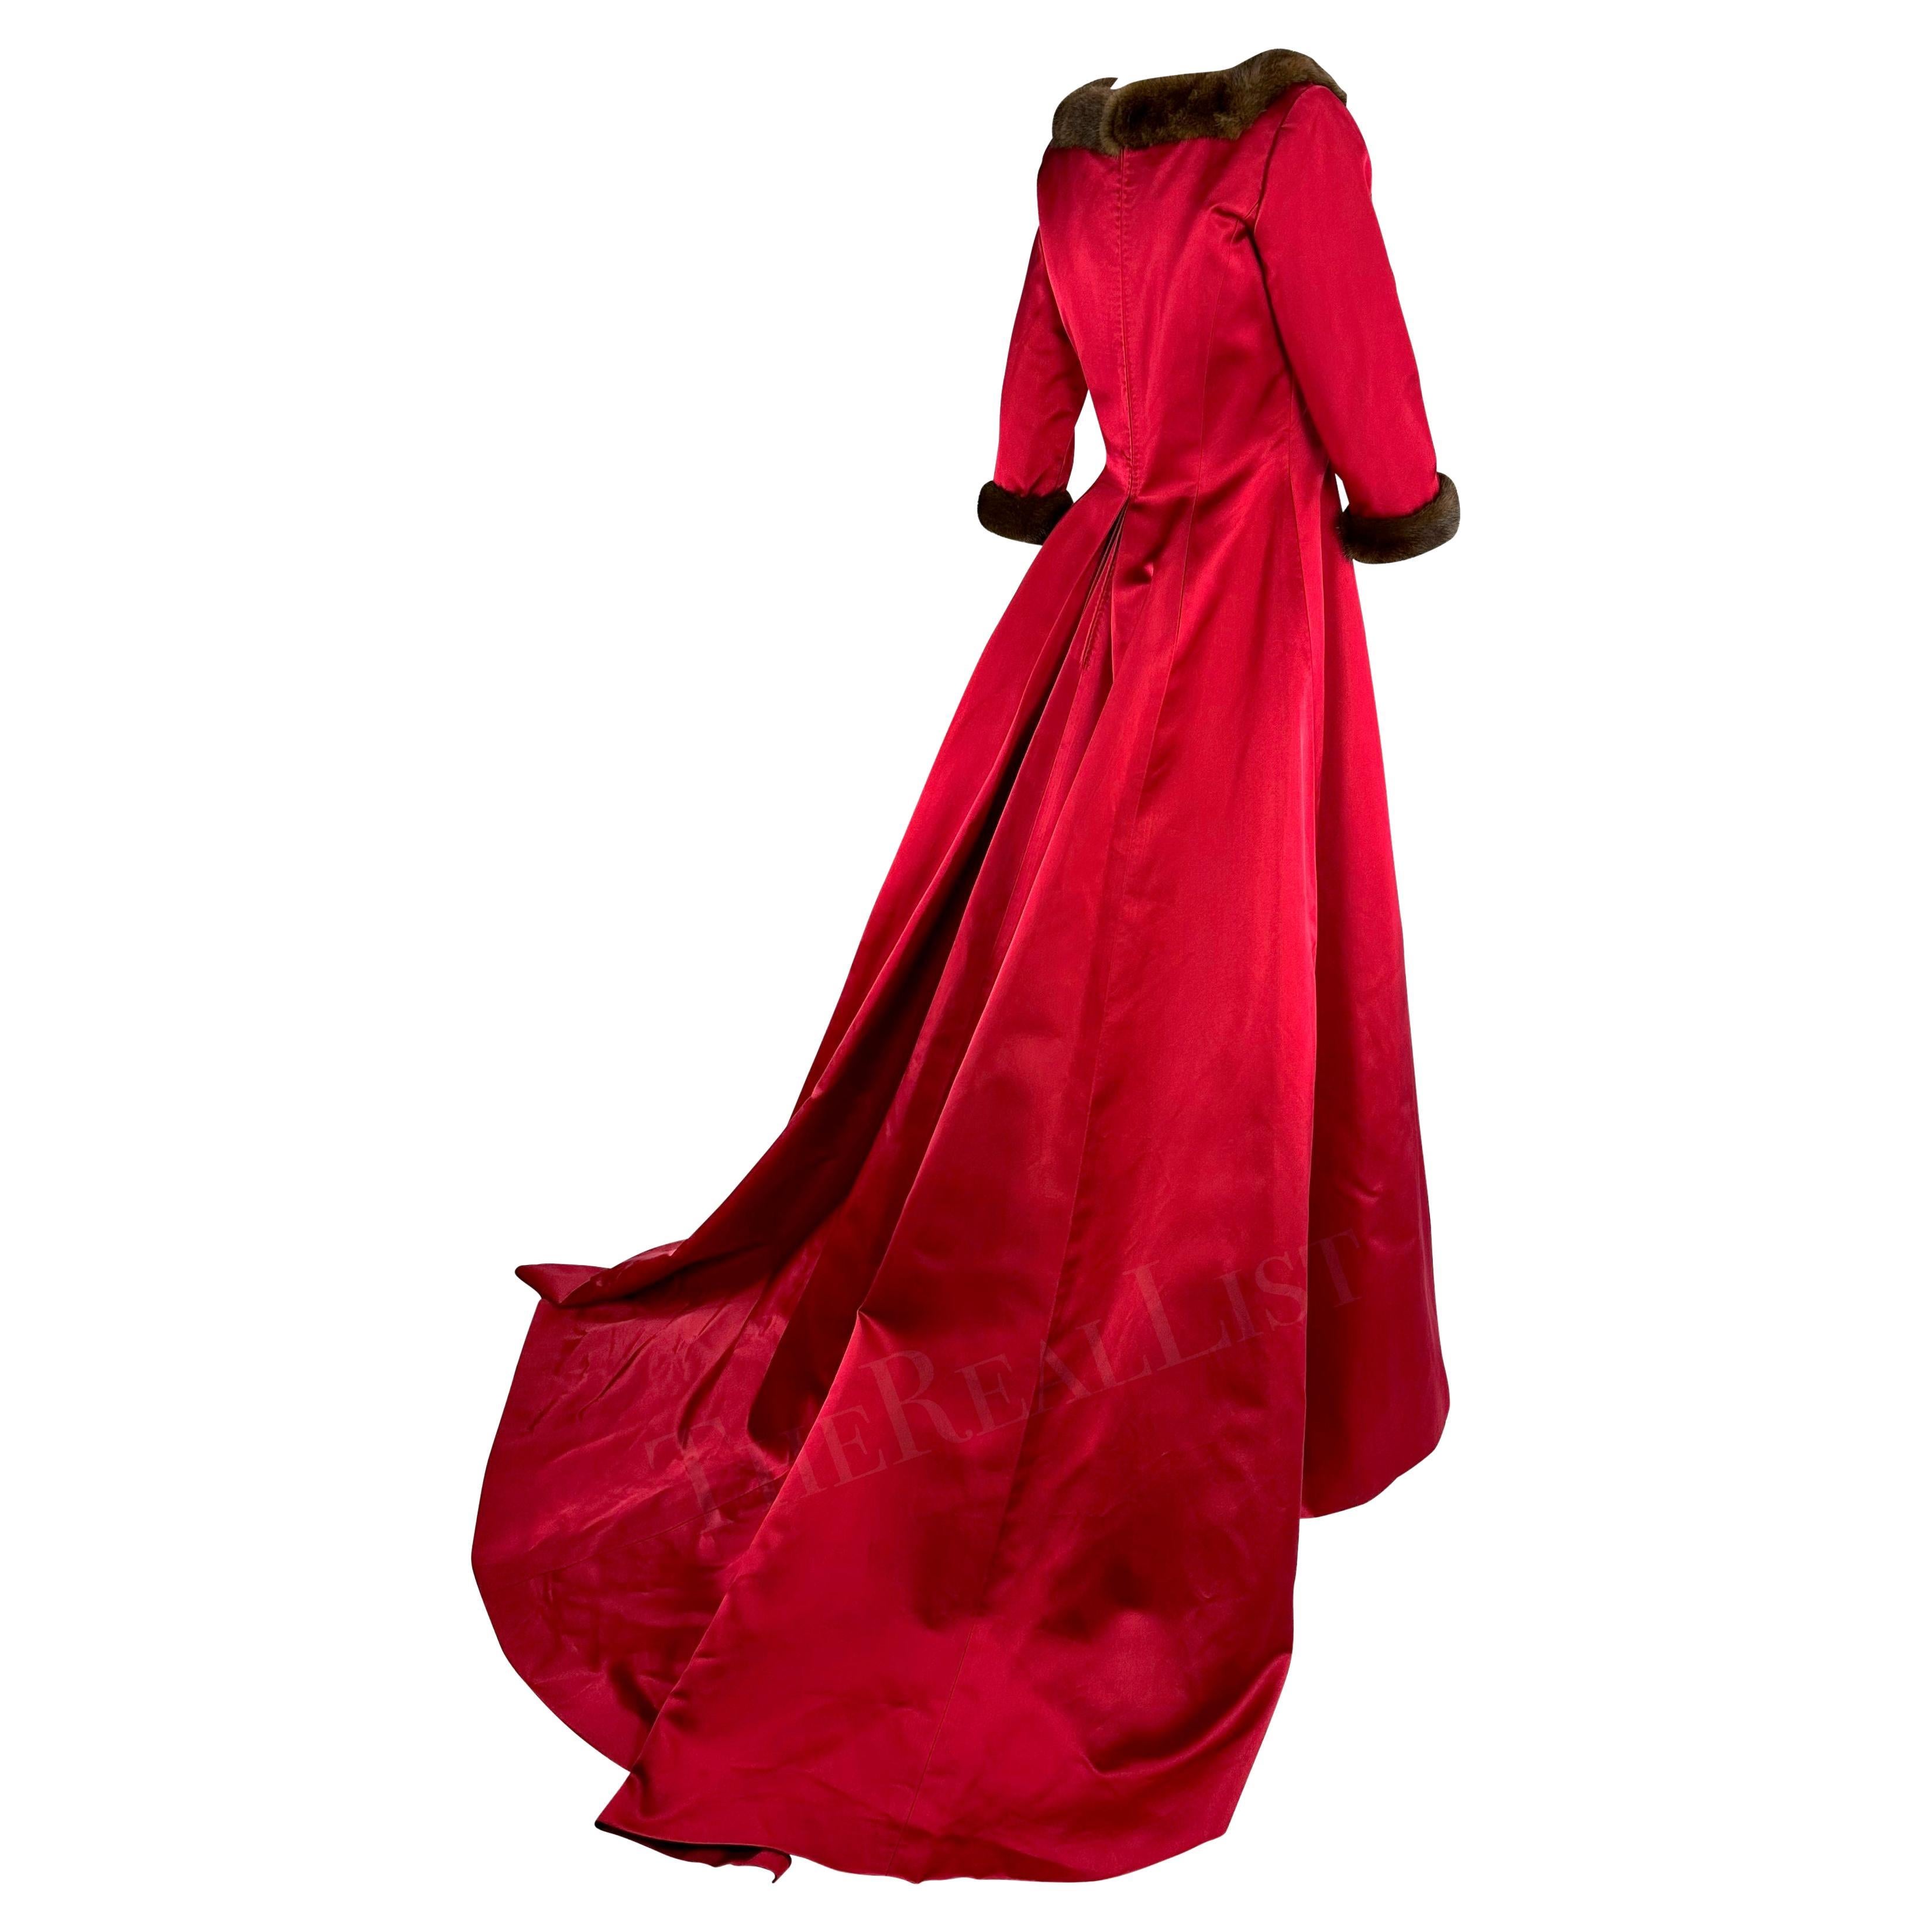 F/W 1999 Oscar de la Renta Naomi Campbell Runway Red Silk Satin Regal Mink Gown For Sale 4